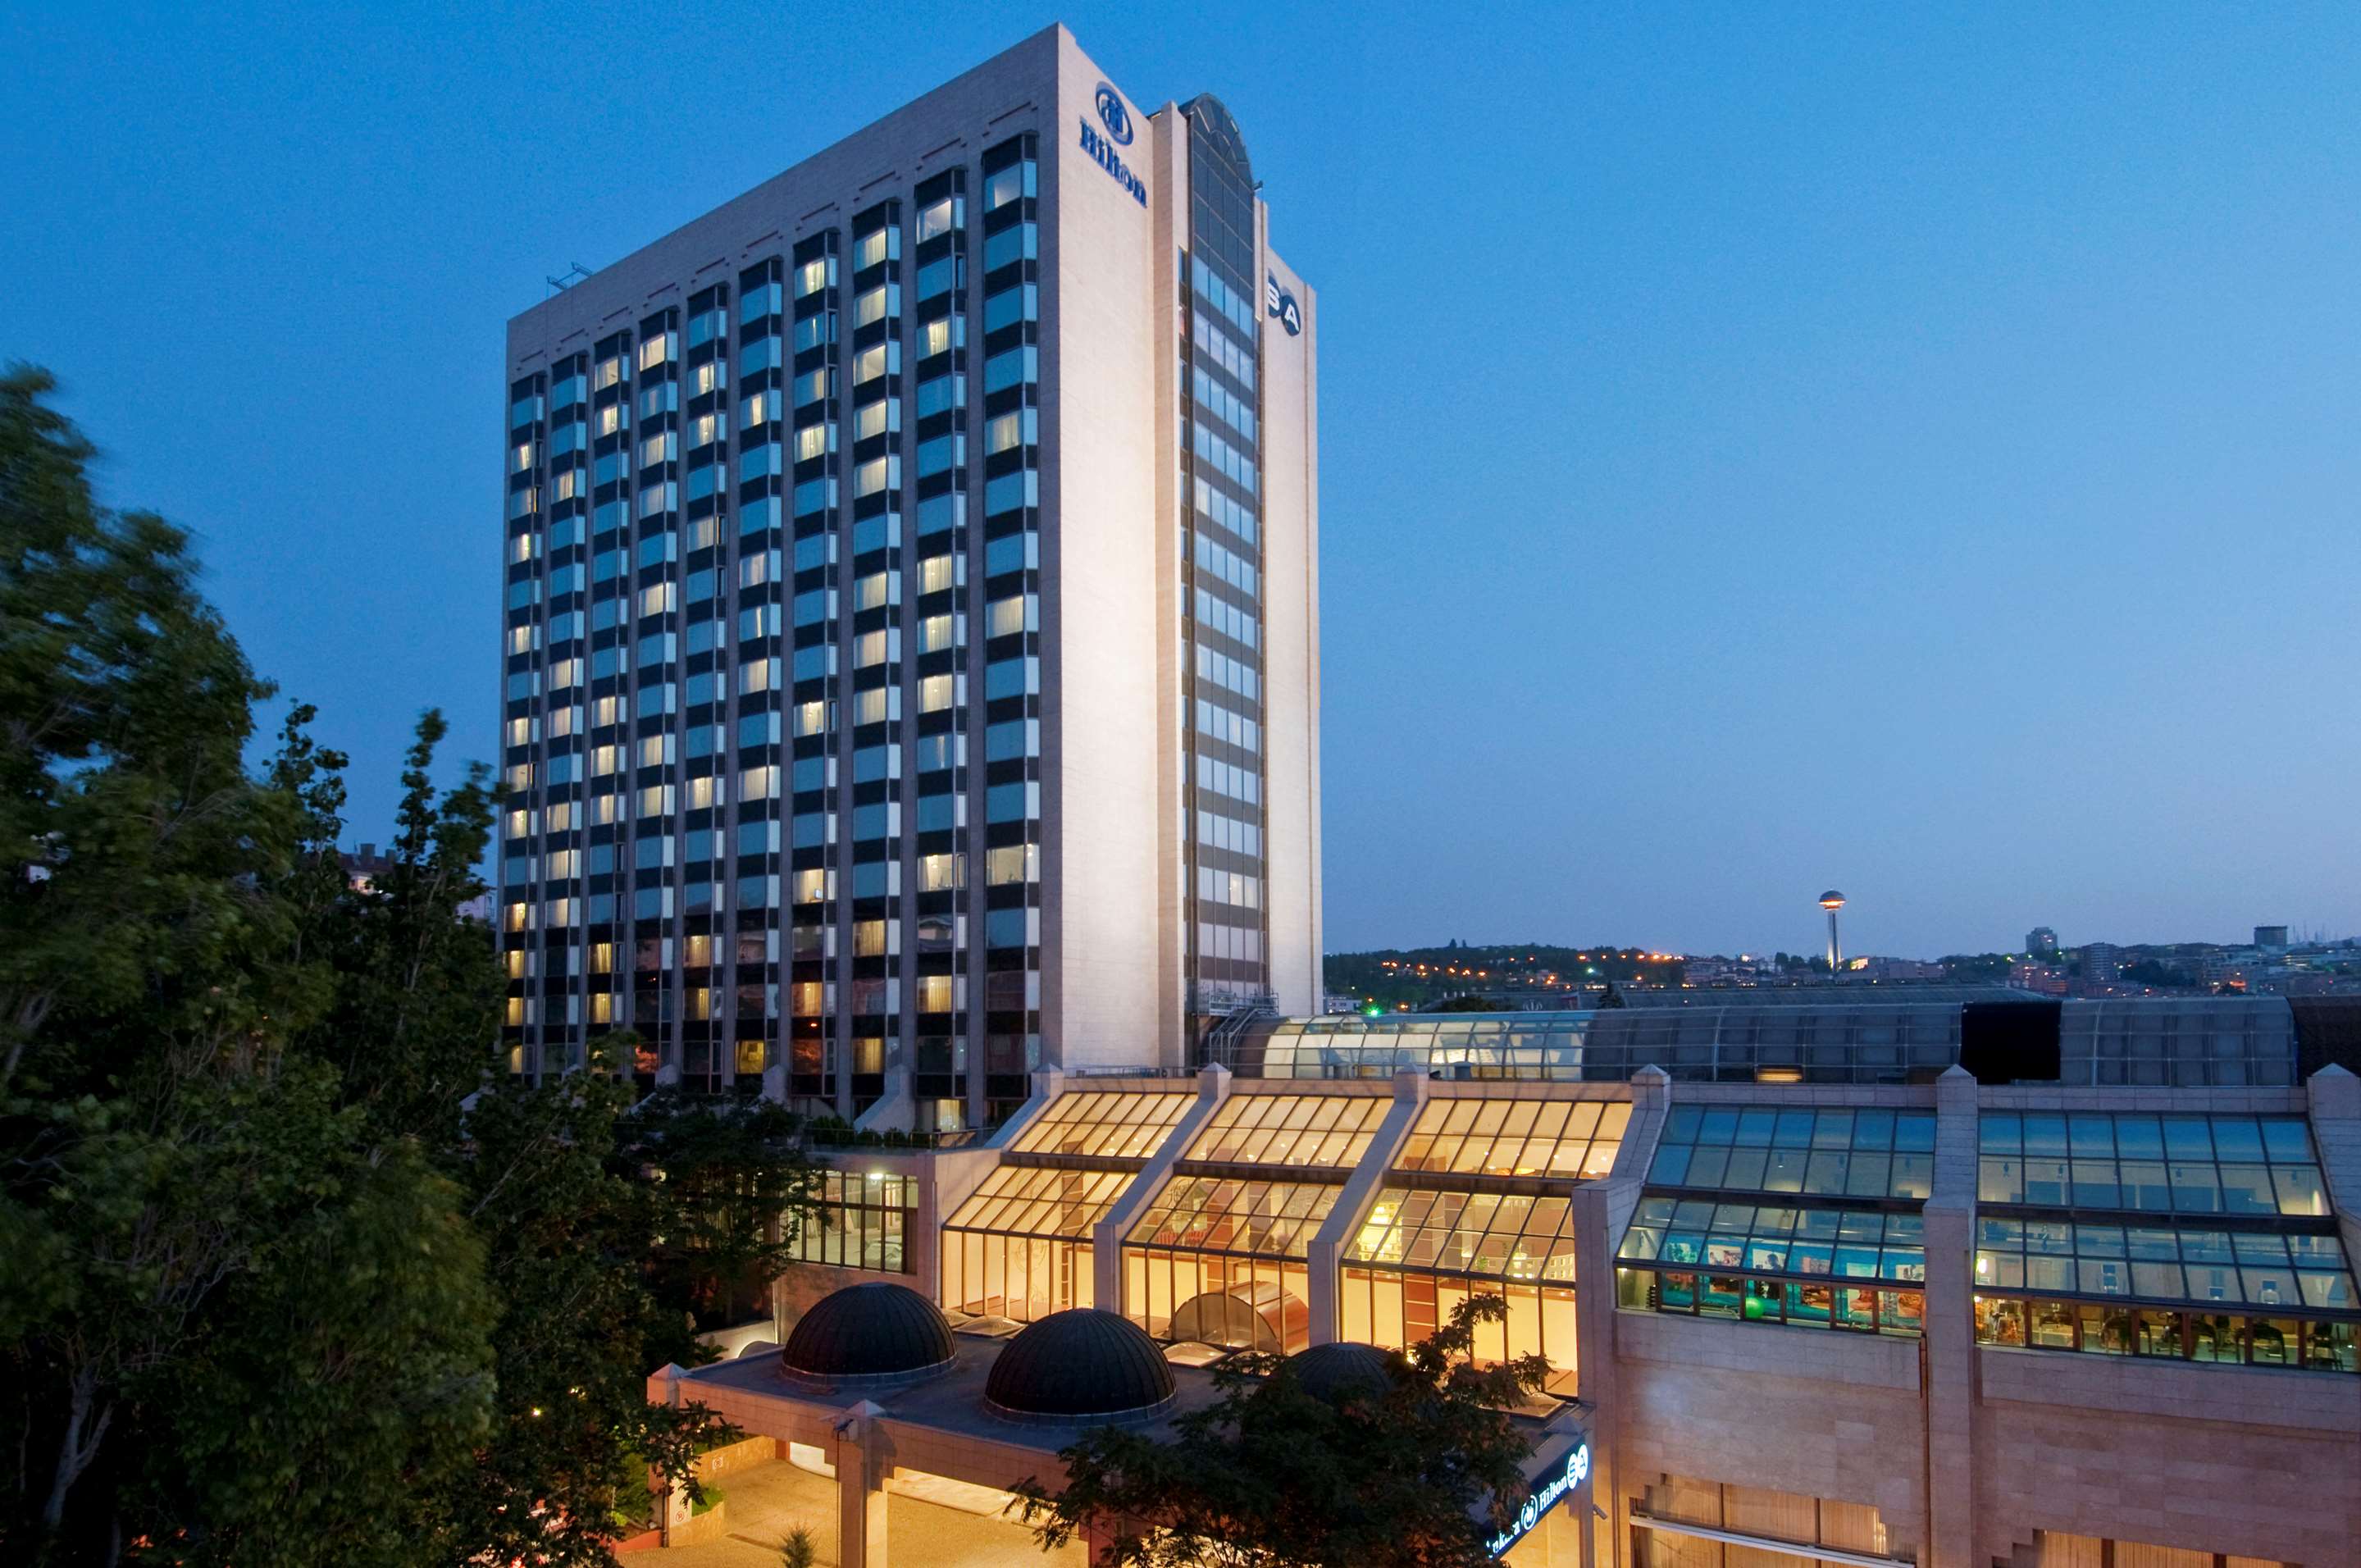 Ankara Hilton (Ankara Hiltonsa)